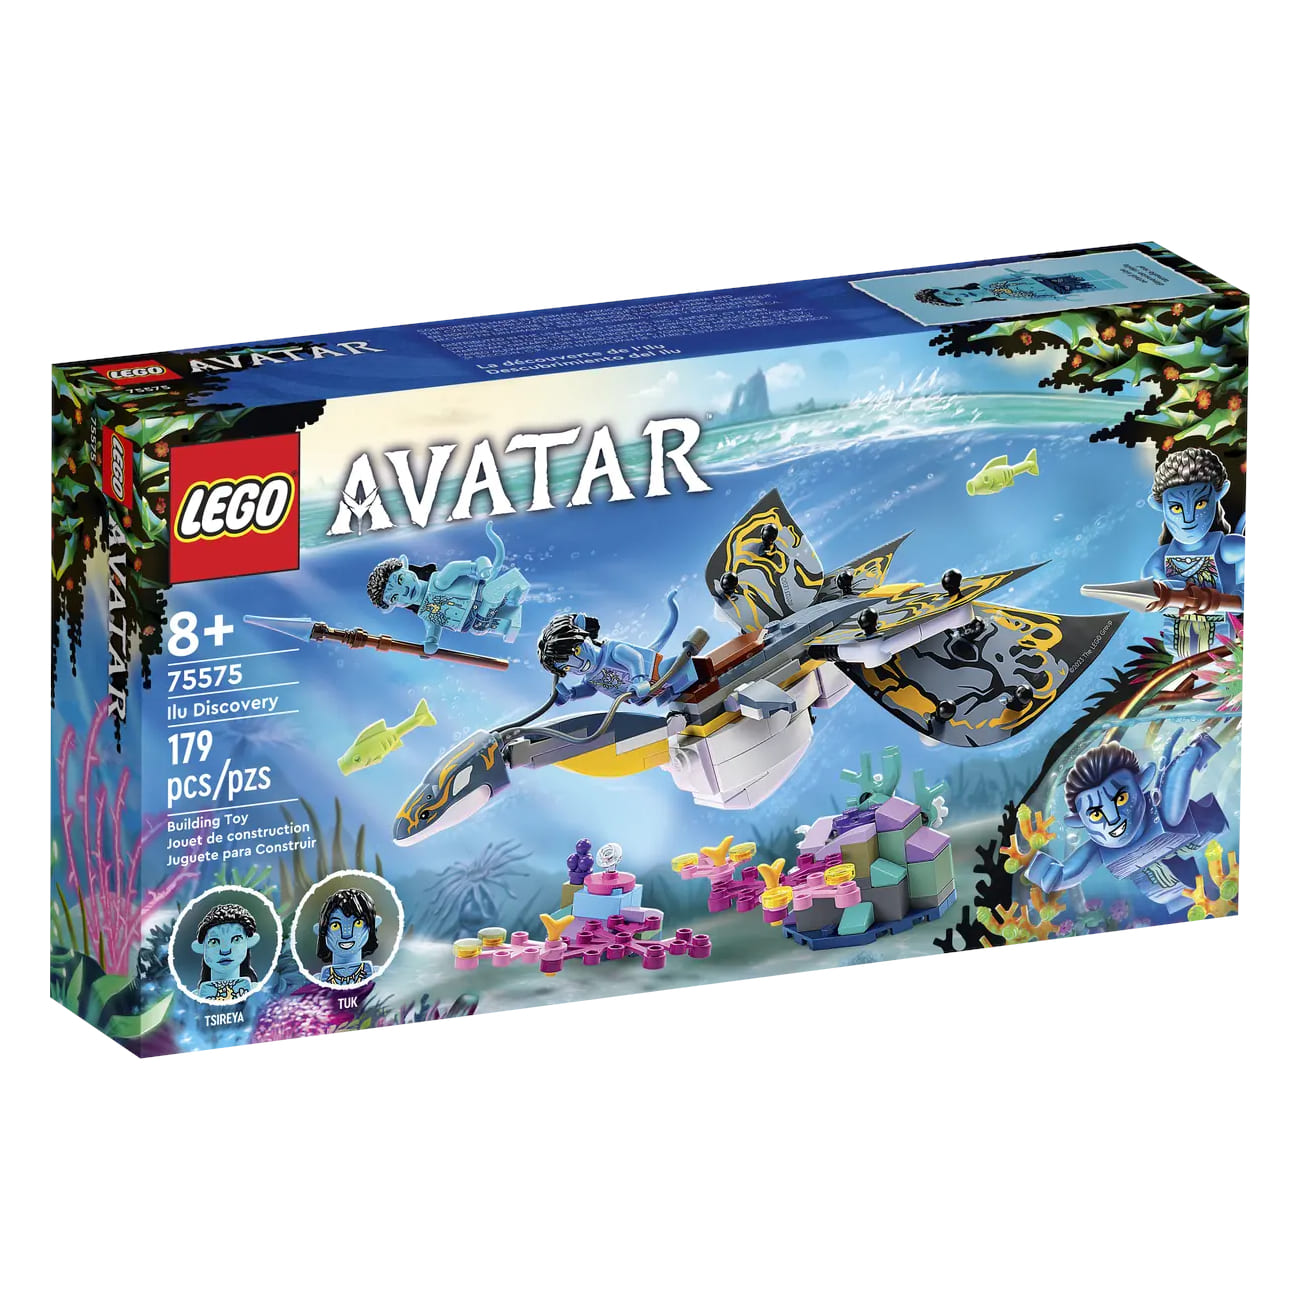 Конструктор LEGO Avatar Ilu Discovery 75575, 179 деталей конструктор lego avatar ilu discovery 75575 179 деталей